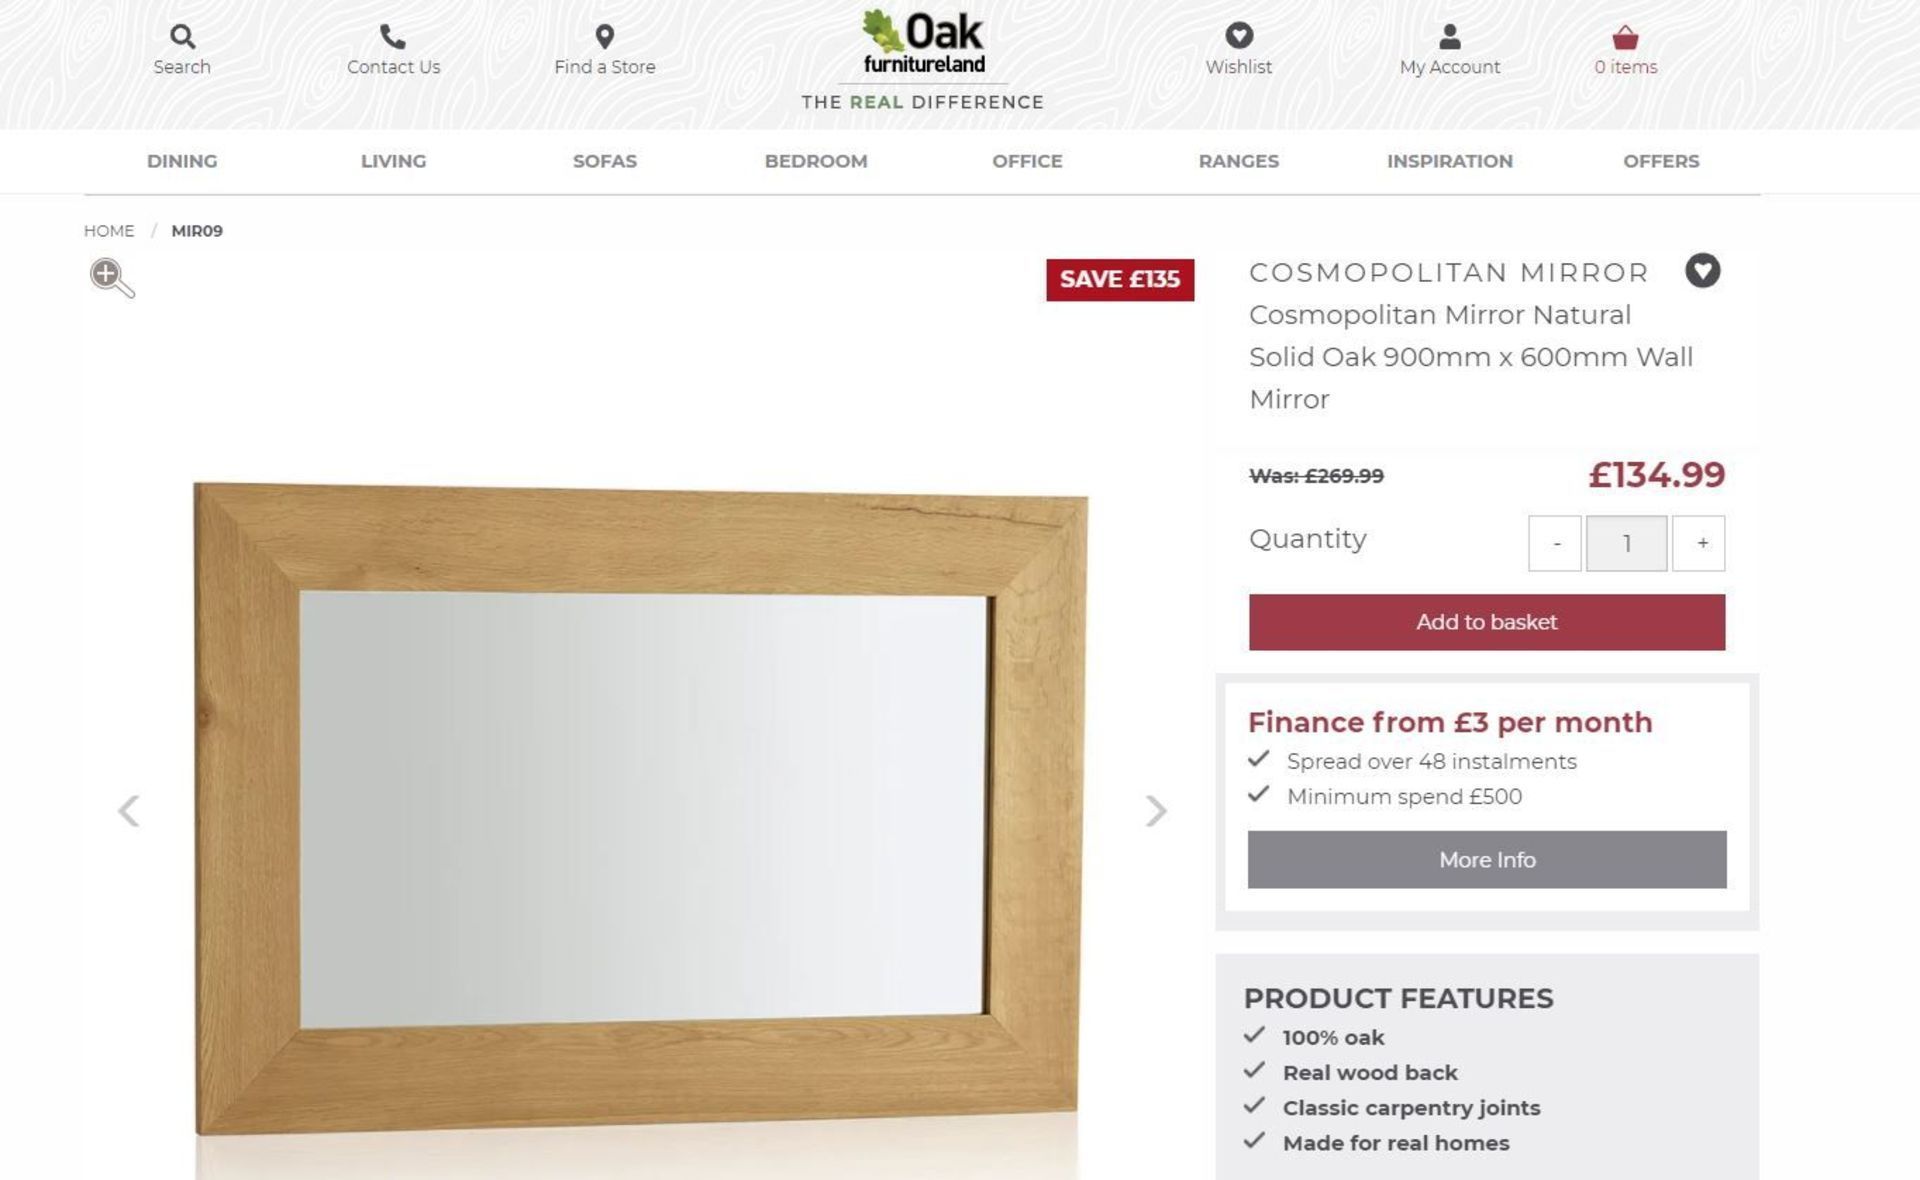 NEW BOXED Cosmopolitan Mirror Natural Solid Oak 900mm x 600mm Wall Mirror. RRP £269.99. 100% OAK,